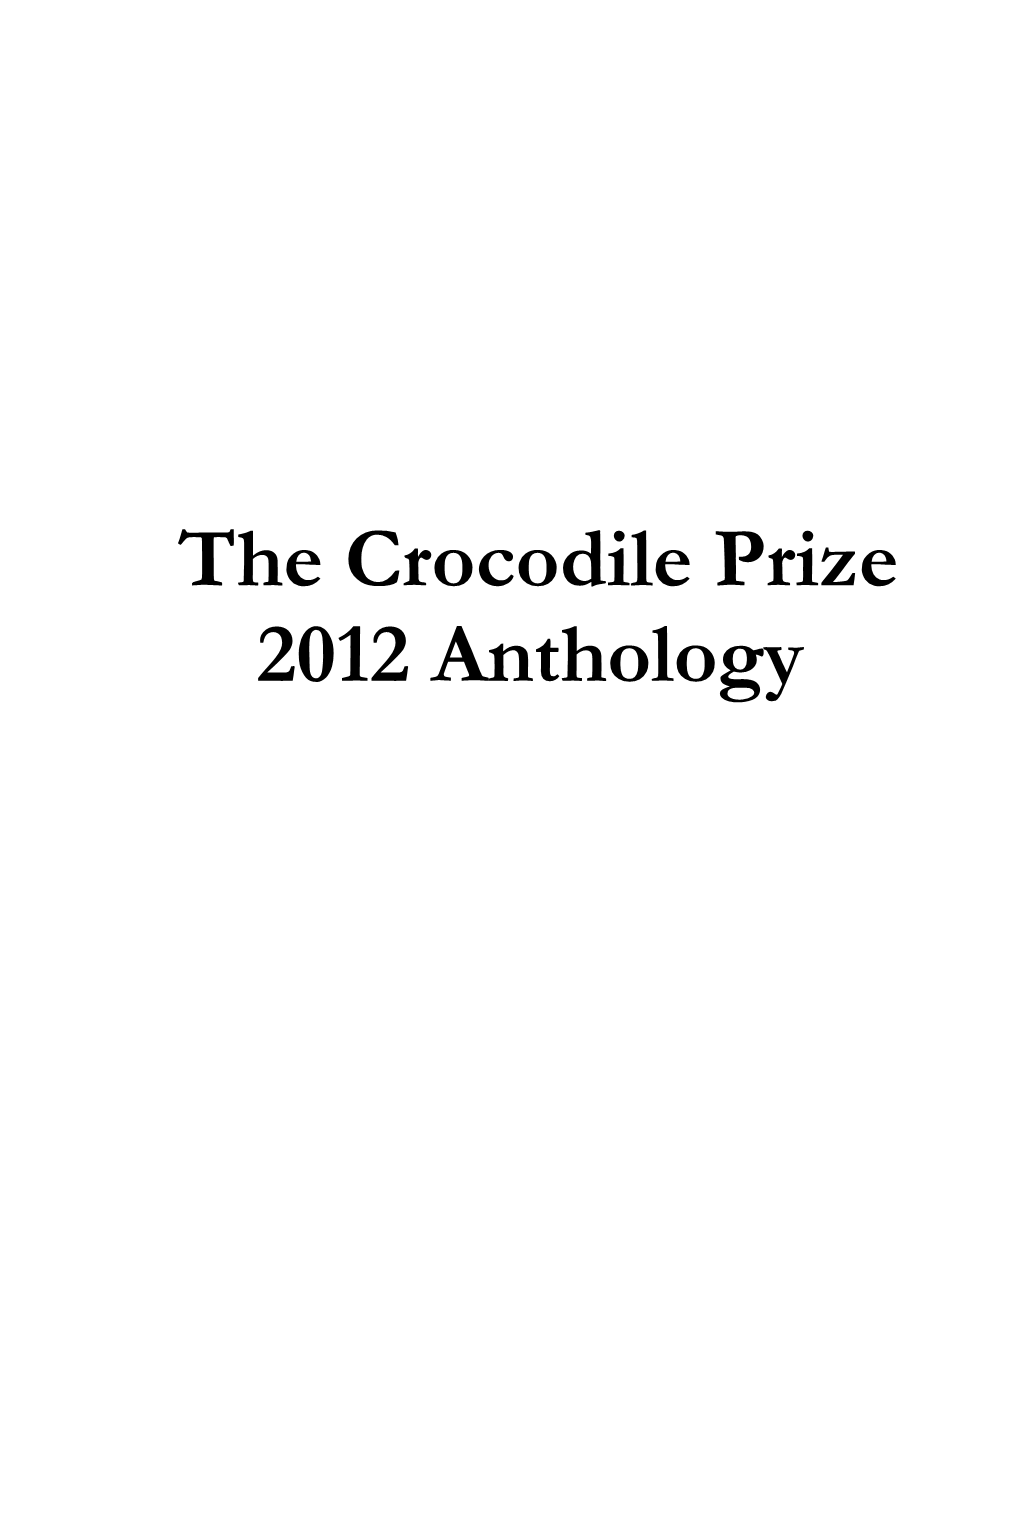 The Crocodile Prize 2012 Anthology